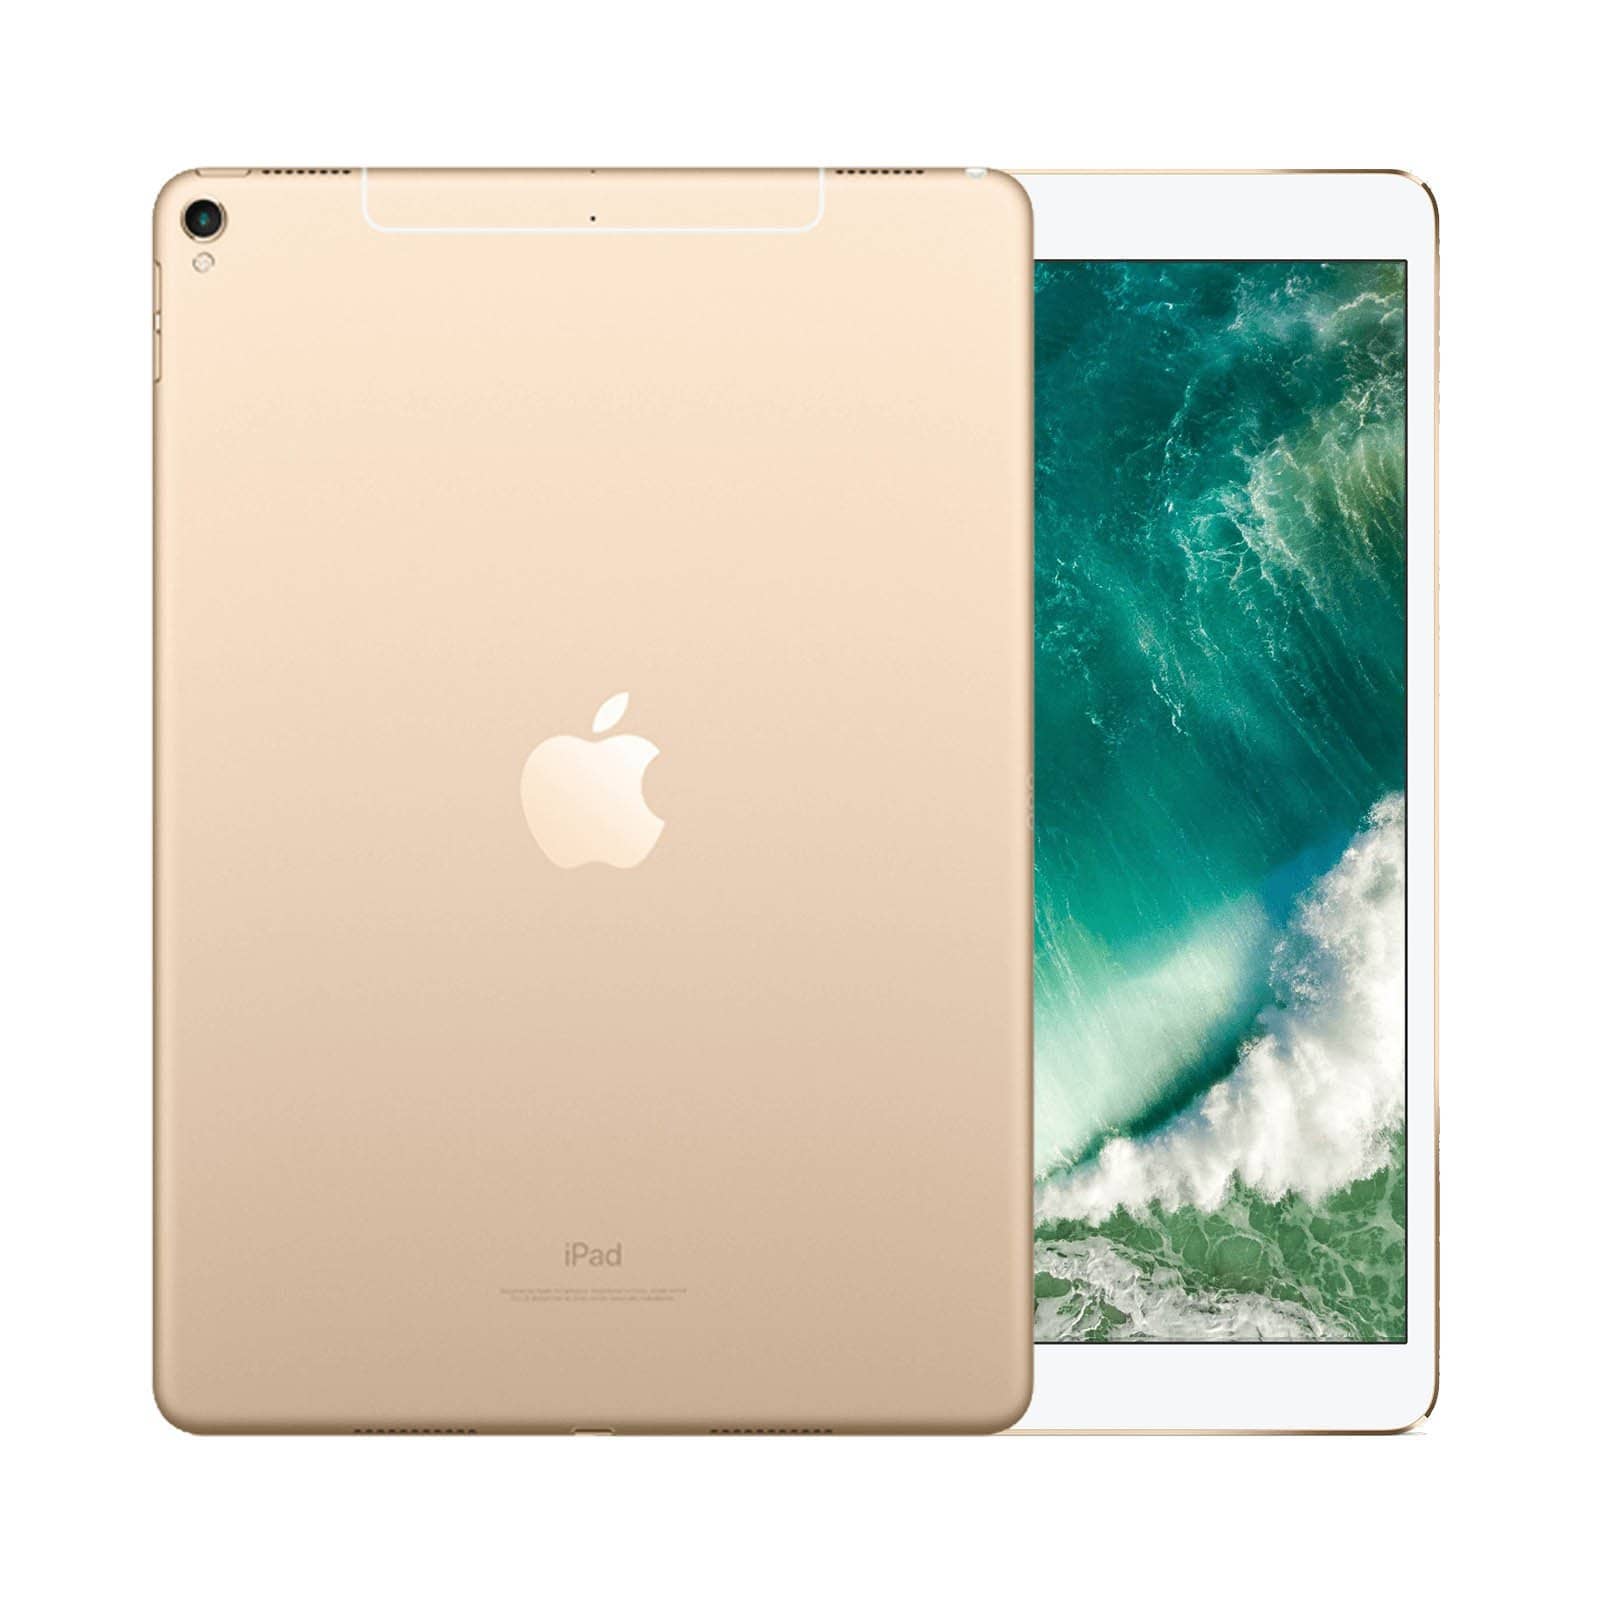 iPad Pro 10.5 Inch 512GB Gold Very Good - Unlocked